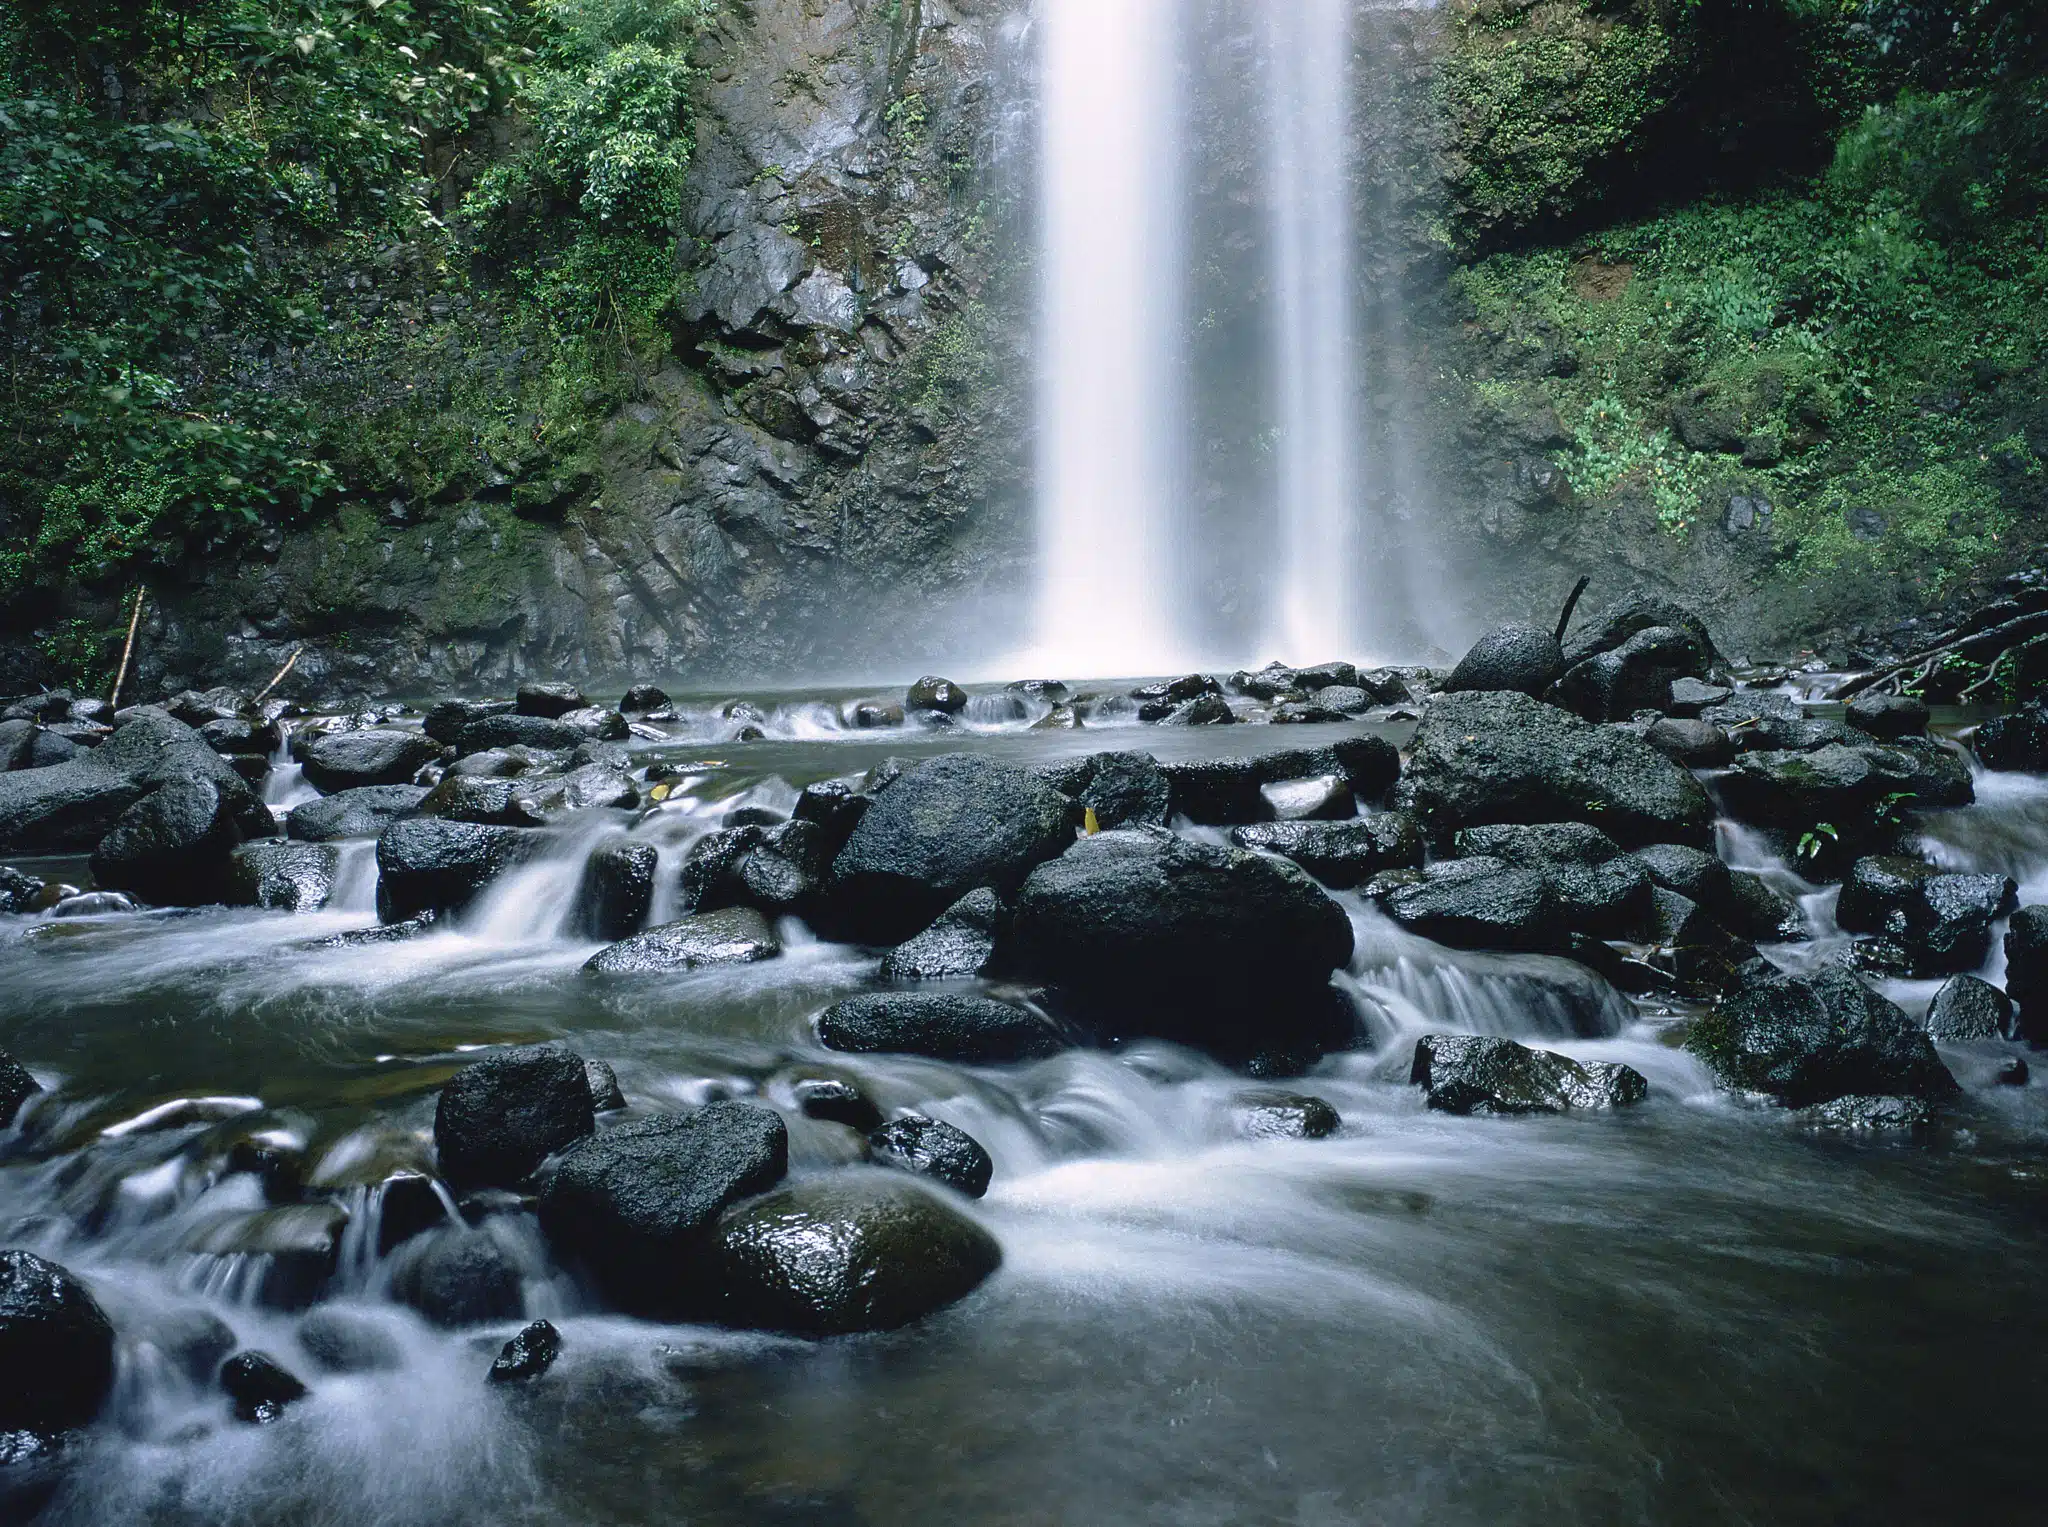 Uluwehi Falls (Secret Falls) is a Waterfall located in the city of Kapaa on Kauai, Hawaii